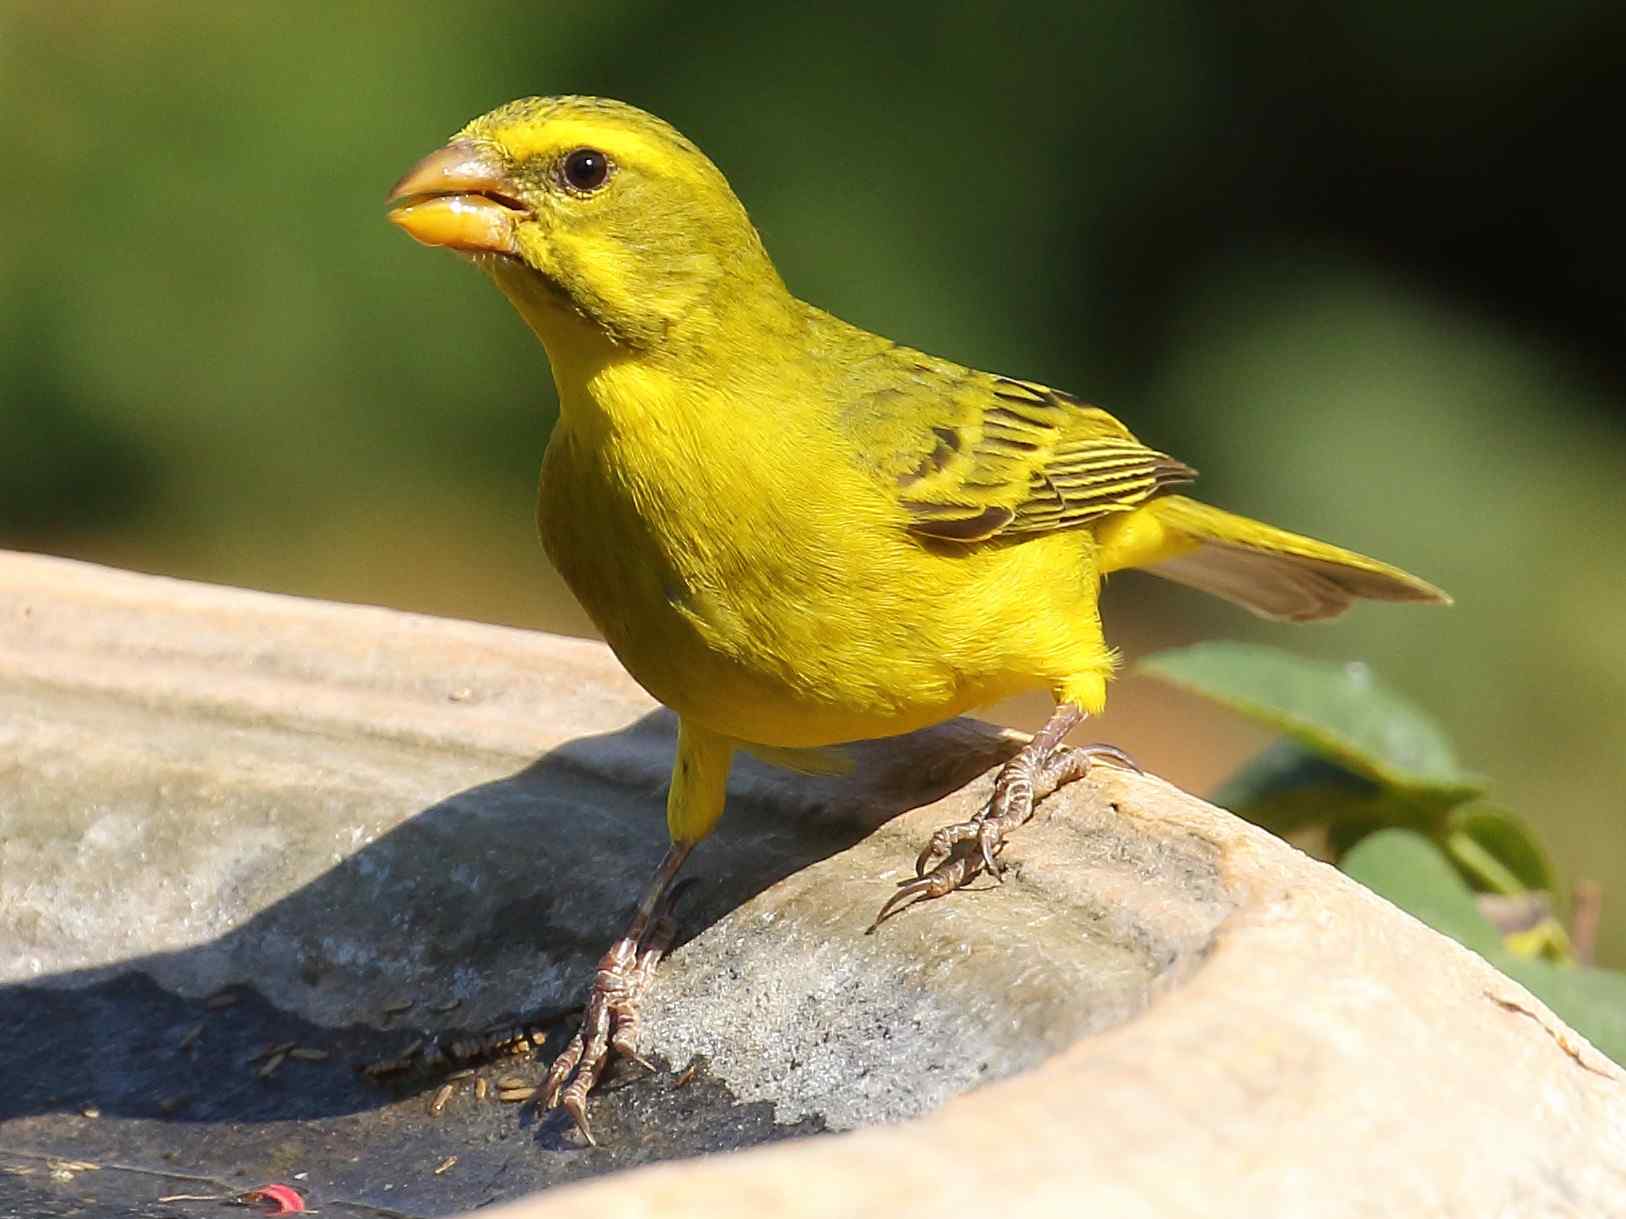 Brimstone Canary